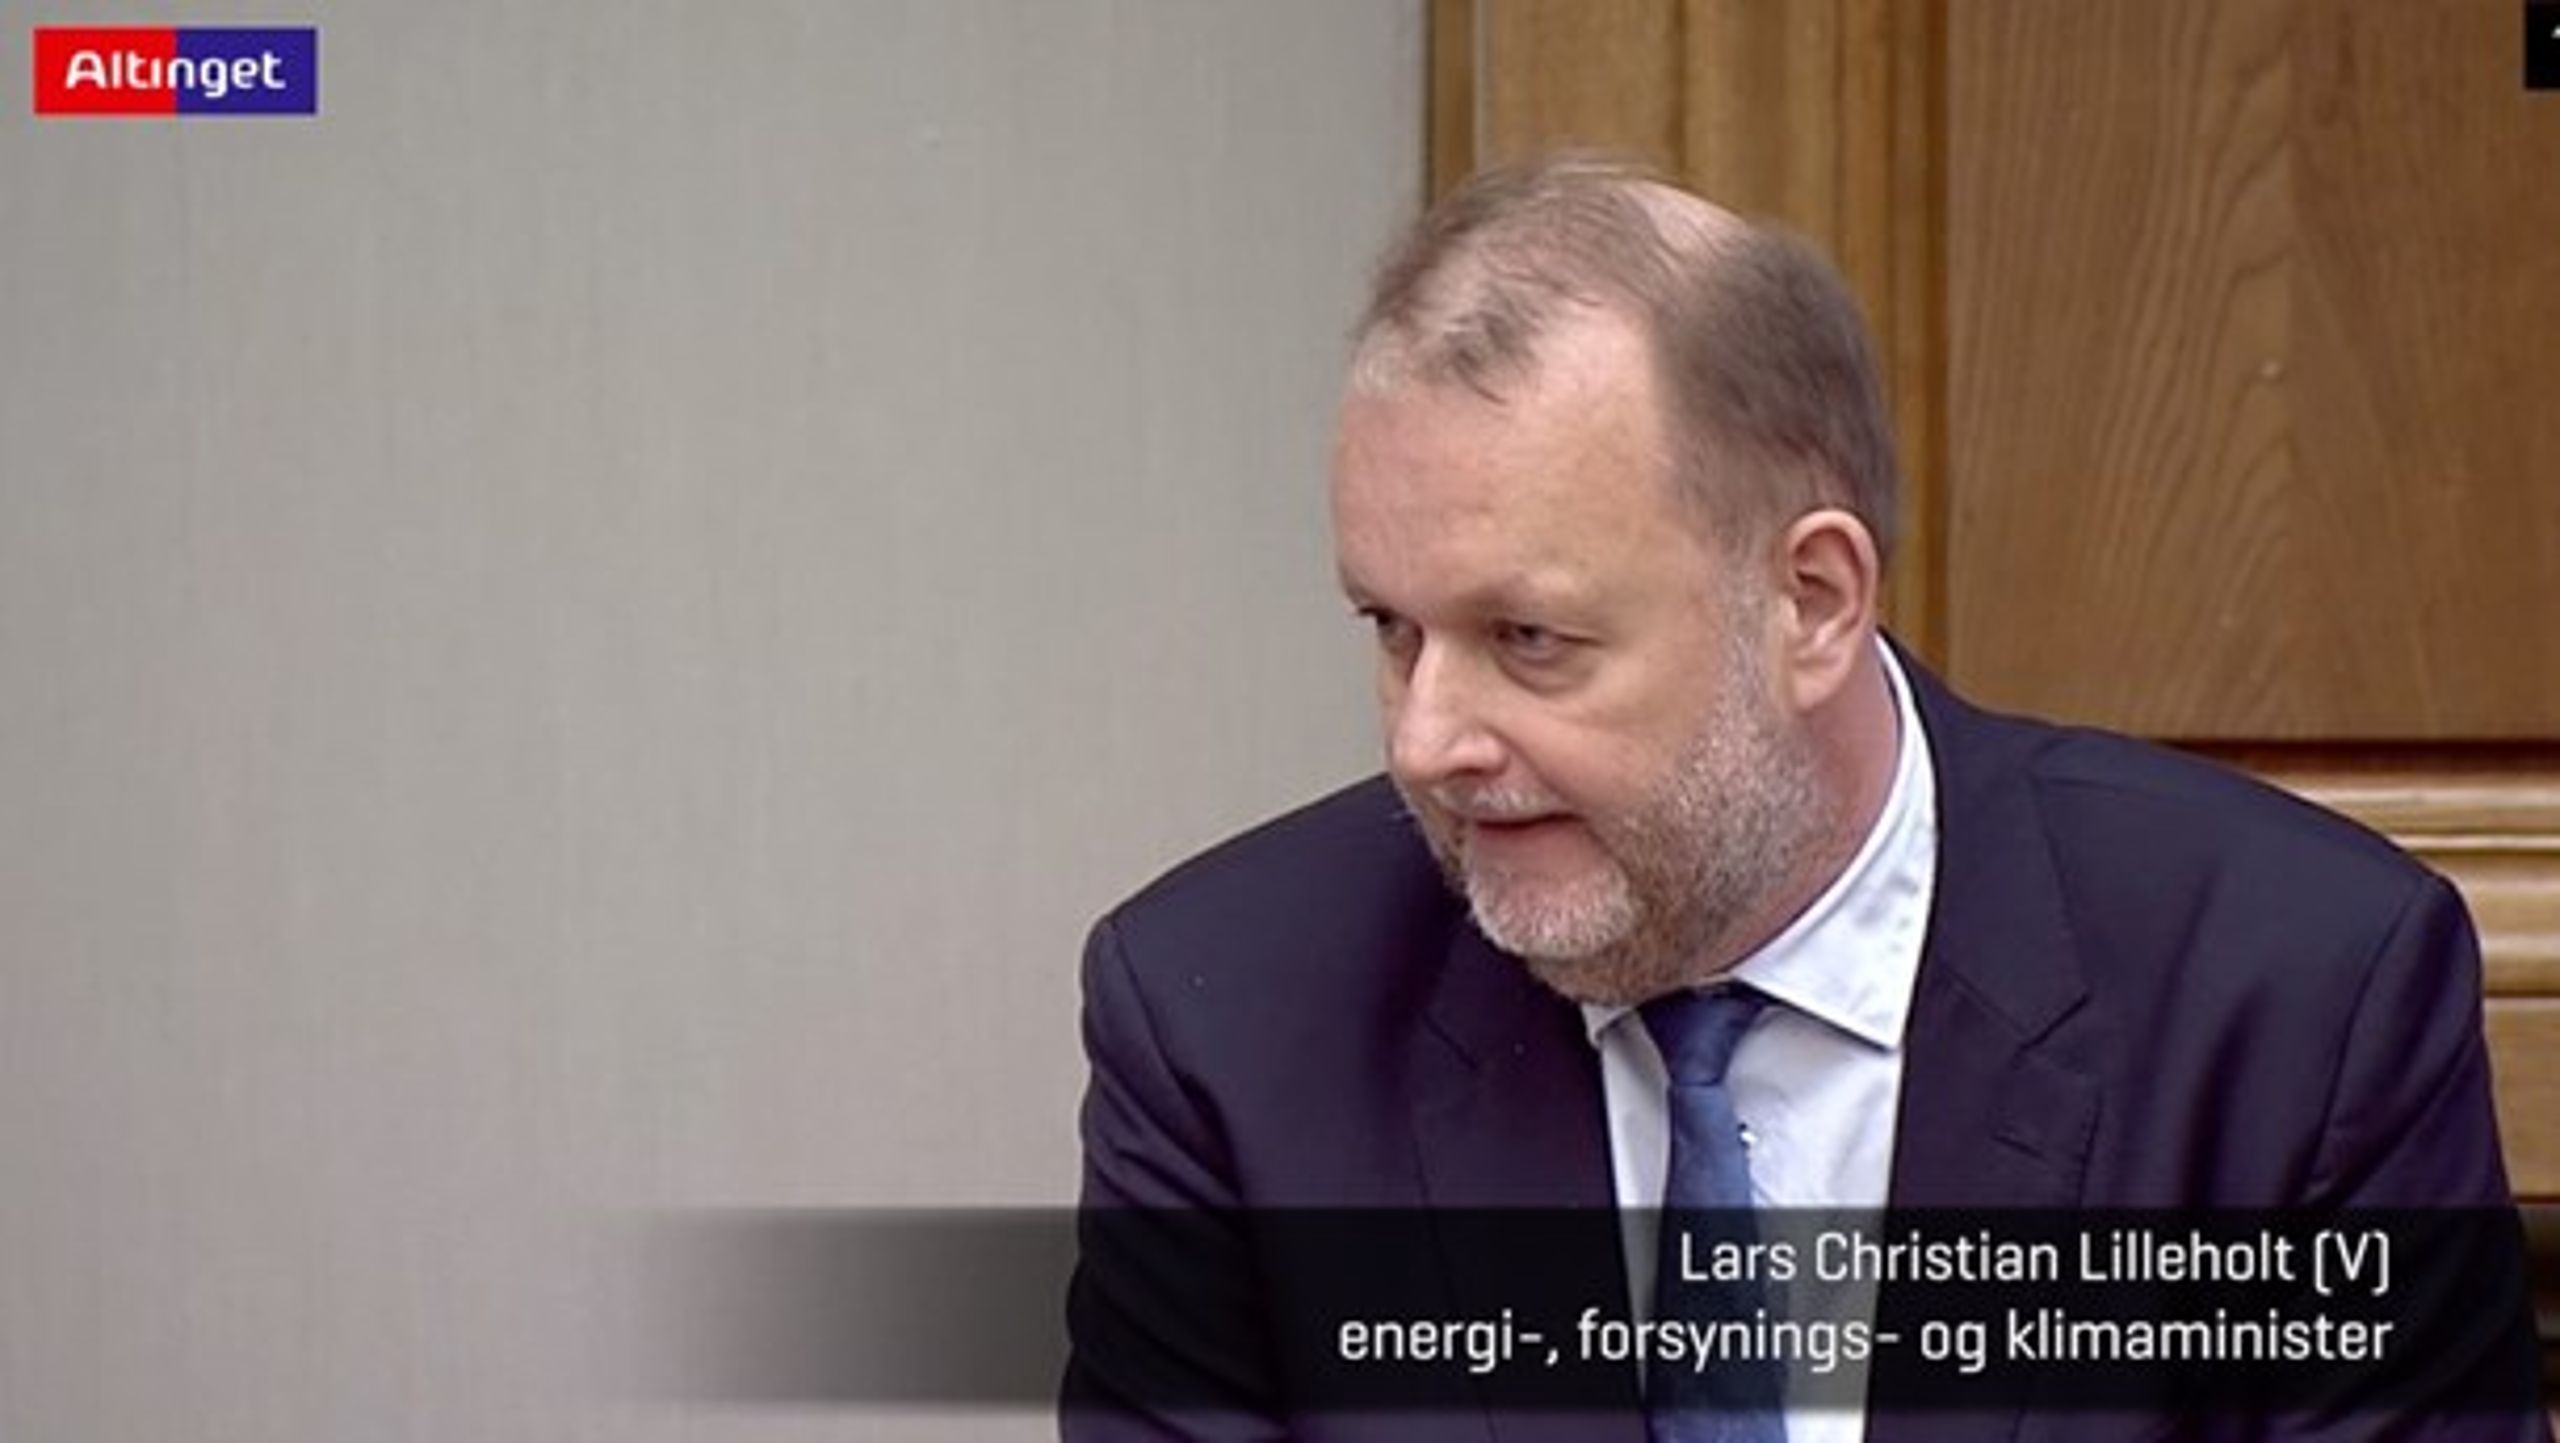 Massive investeringer skal der ifølge&nbsp;energi-, forsynings- og klimaminister Lars Christian Lilleholt (V) til, hvis regeringen skal nå sit mål for vedvarende energi.&nbsp;